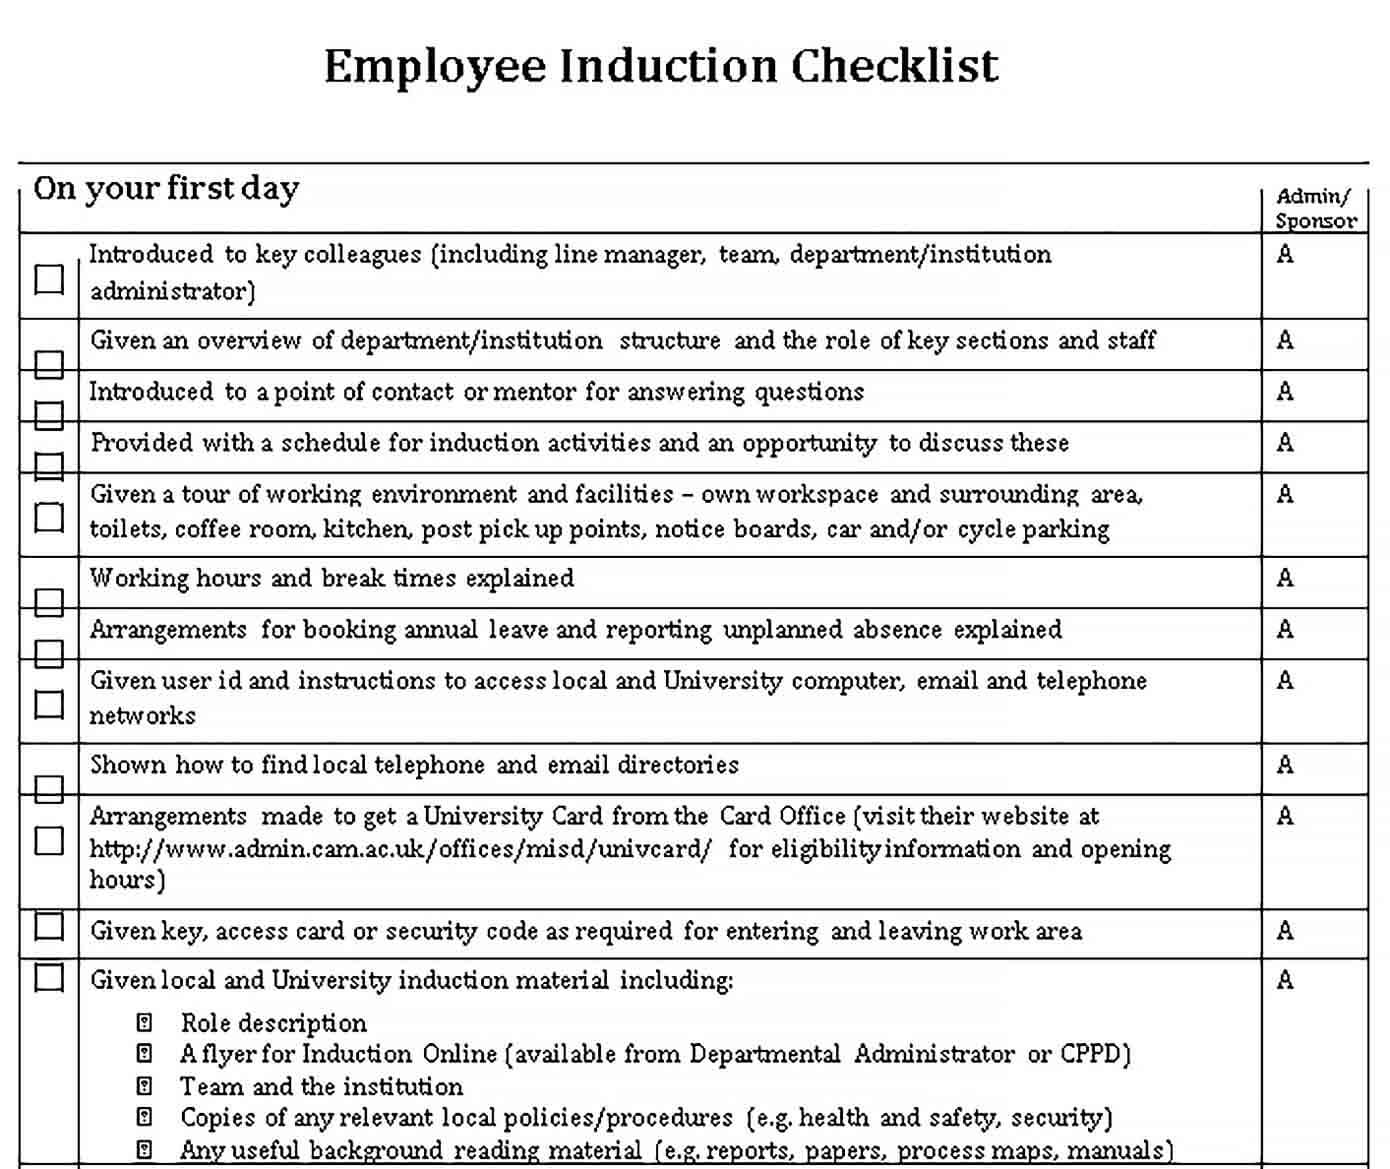 Sample Employee Induction Checklist